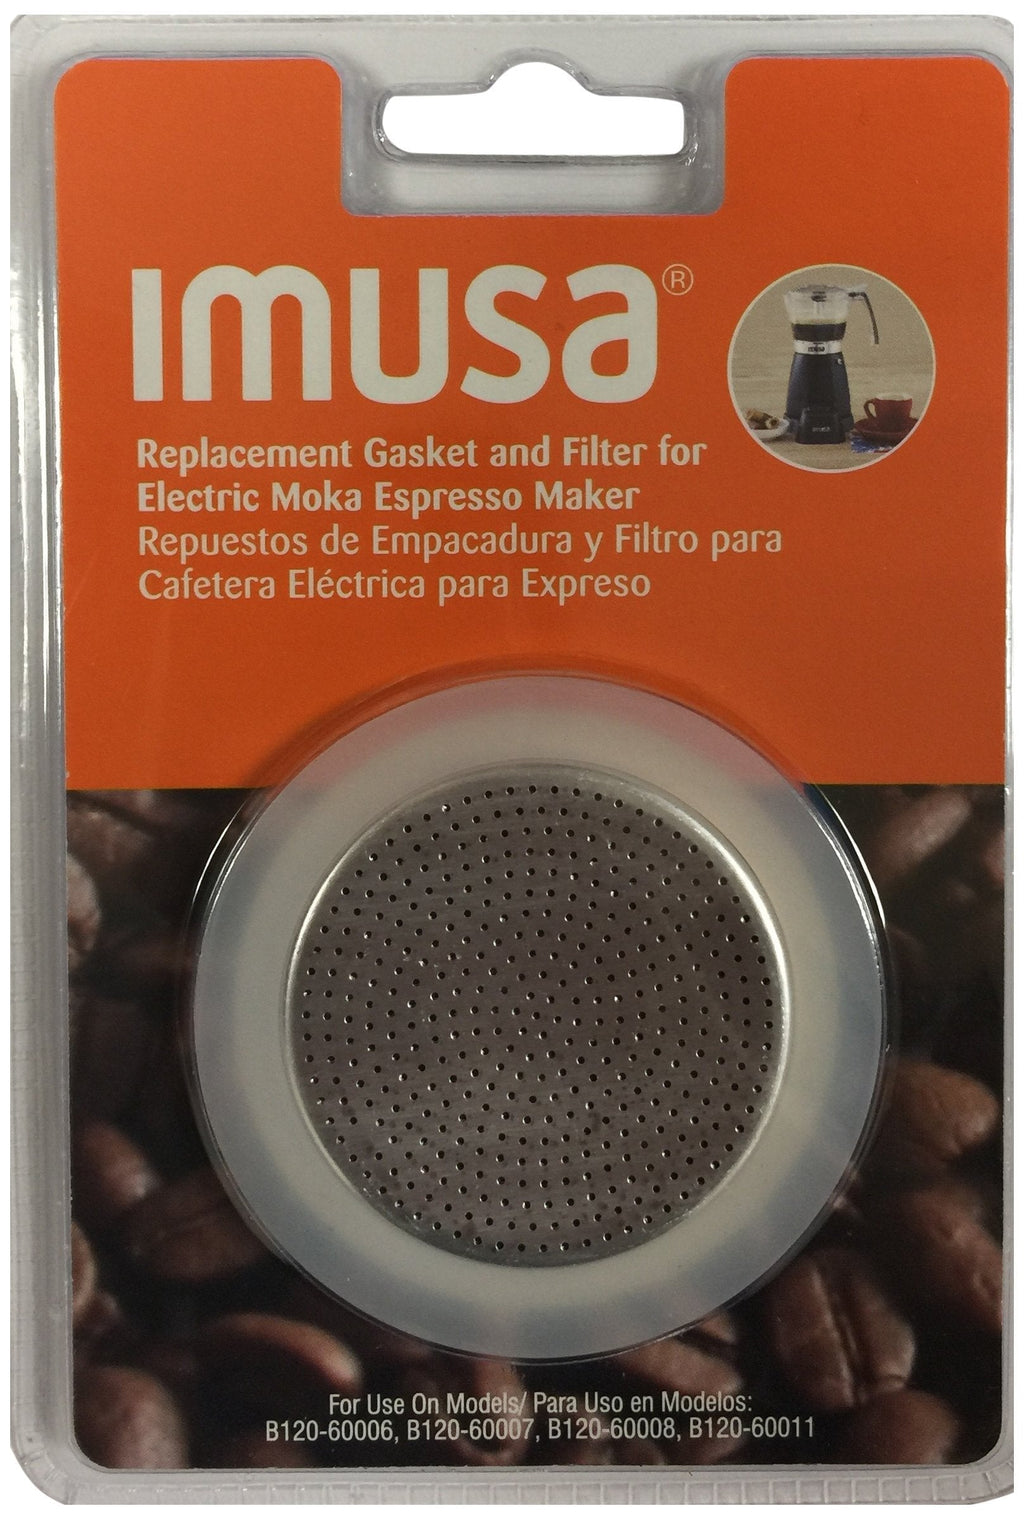 IMUSA USA Replacement Gasket & Filter for IMUSA Electric Moka/Espresso Maker - LeoForward Australia